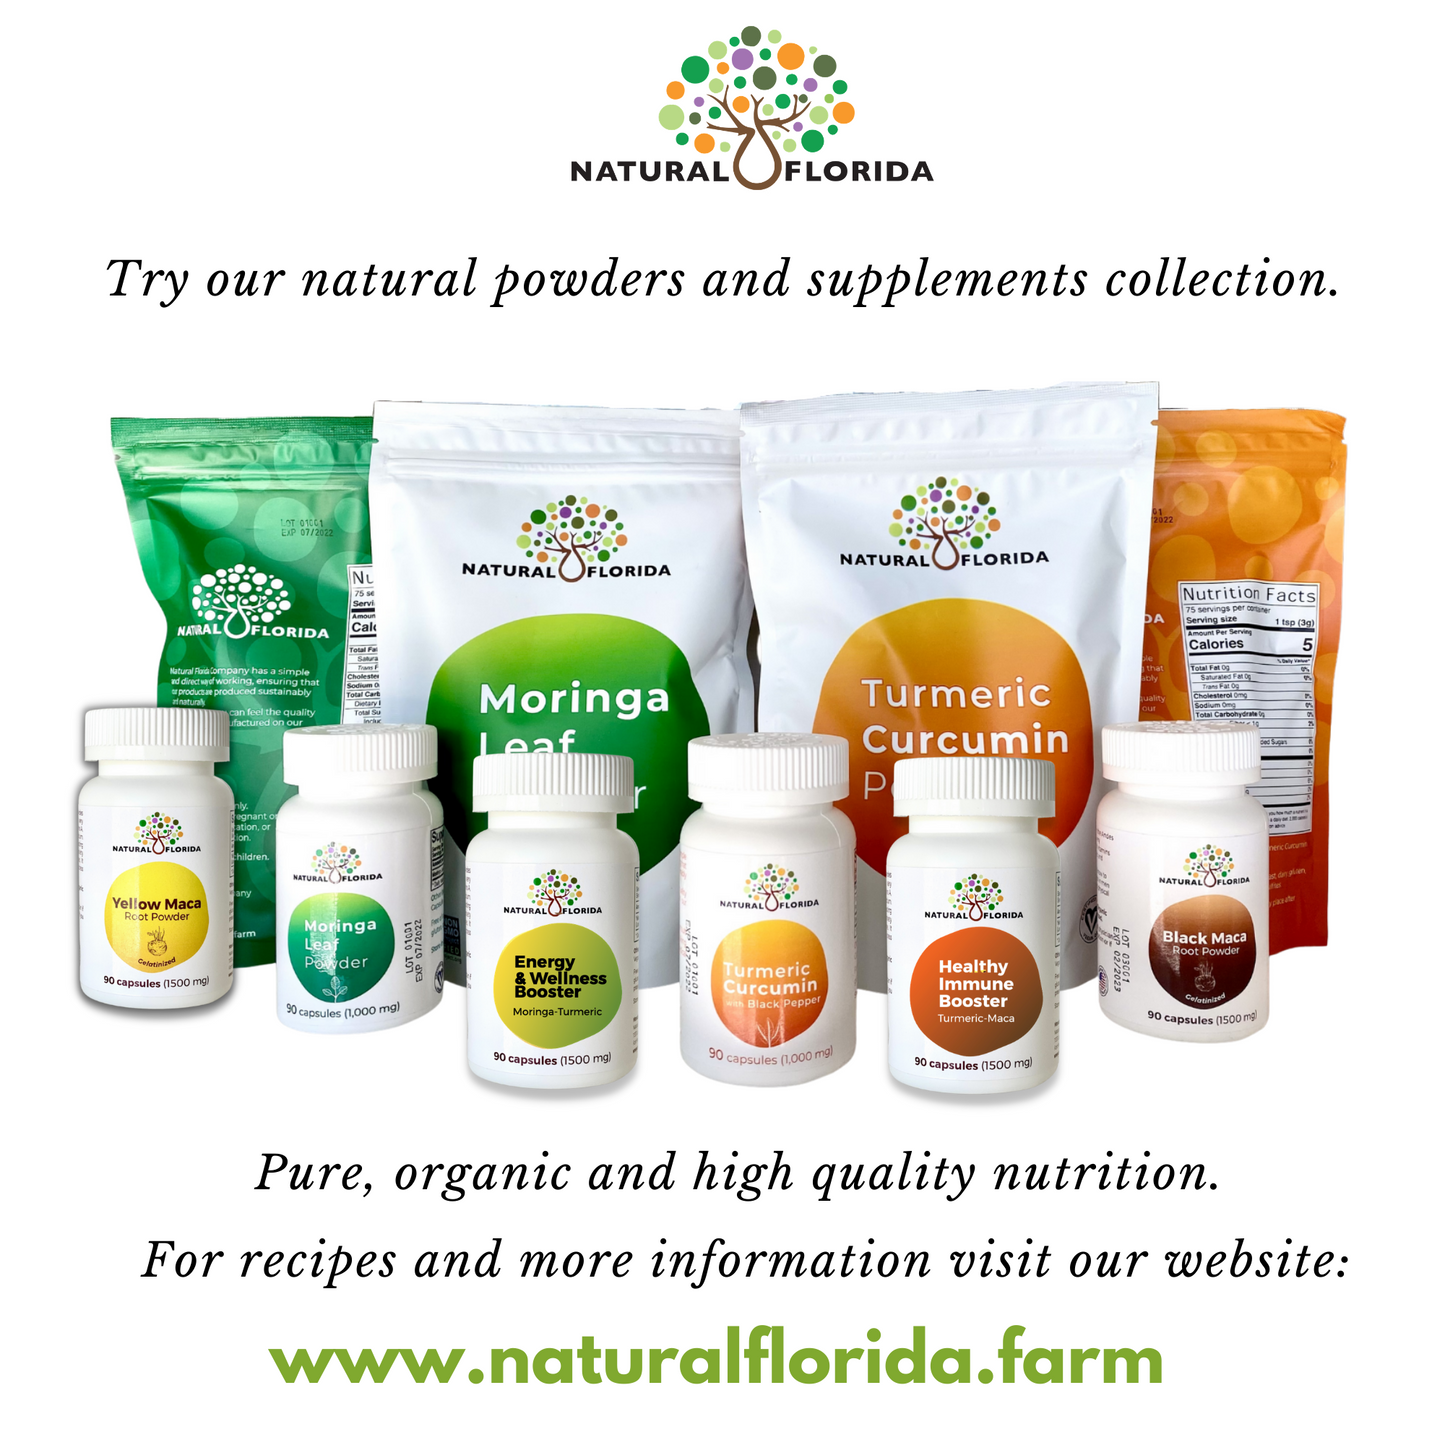 Products of Natural Florida